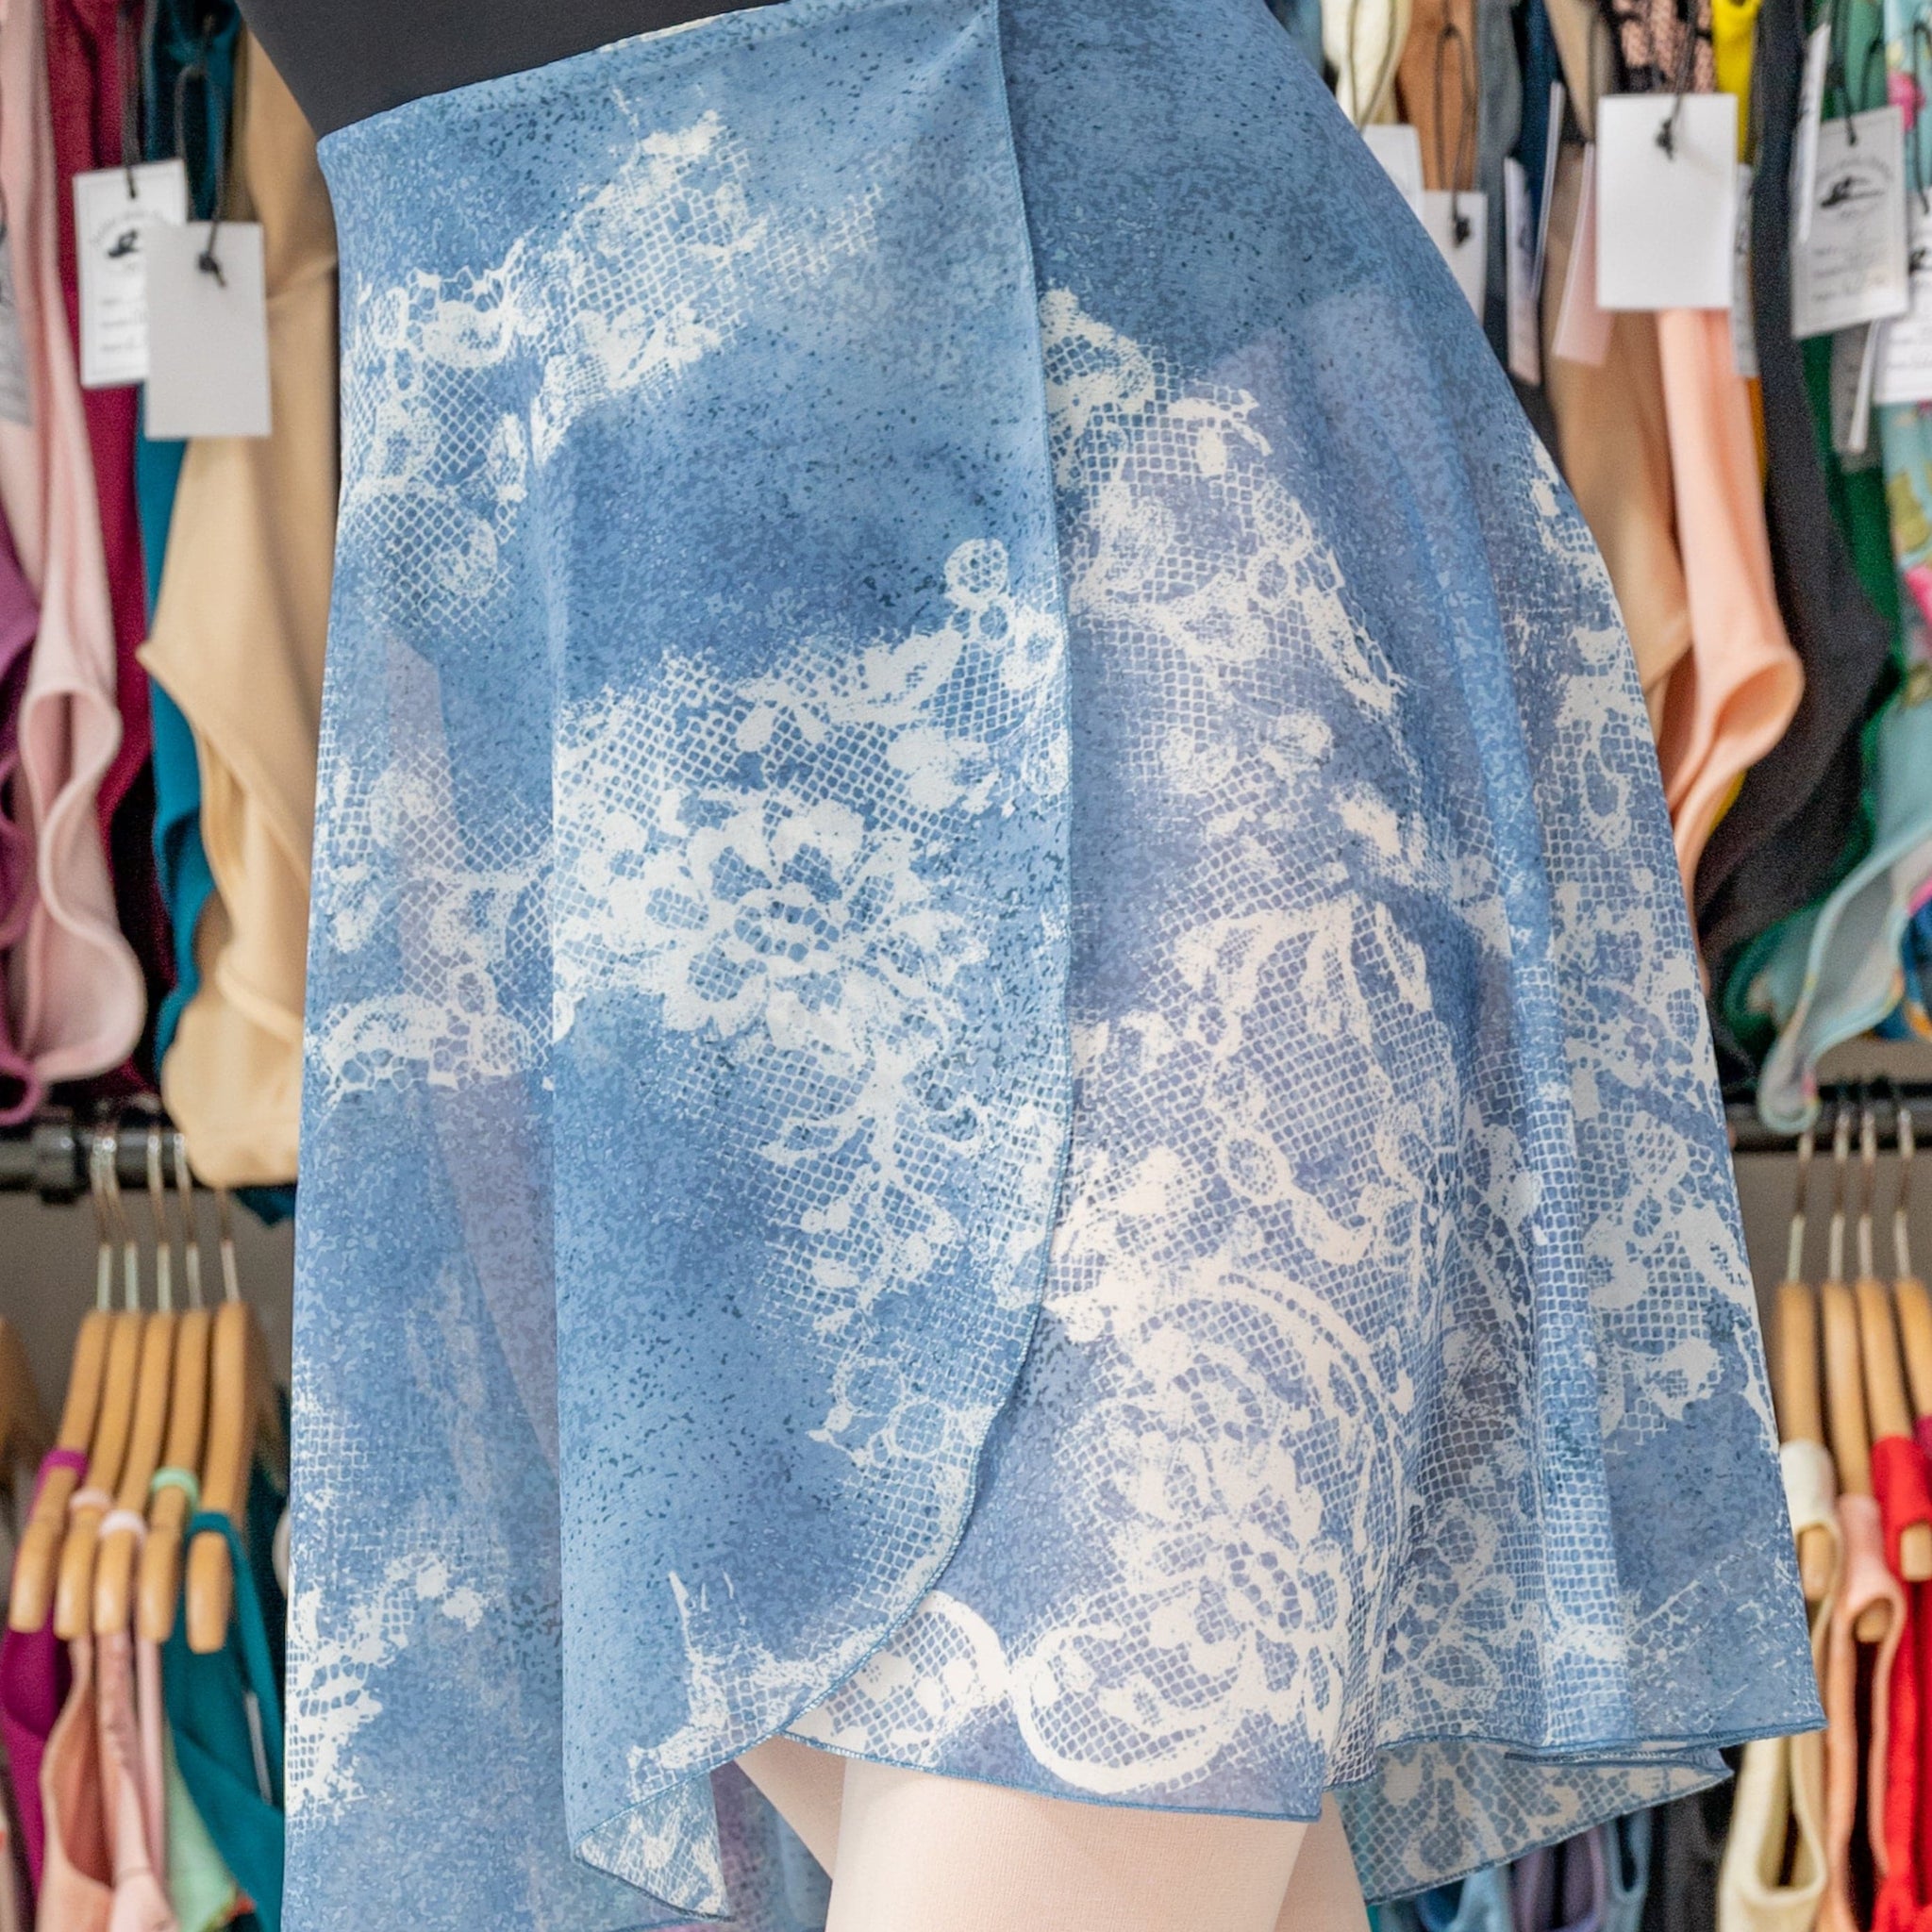 Floral Powder Blue Wrap Long Dance Skirt MP339 for Women by Atelier della Danza MP